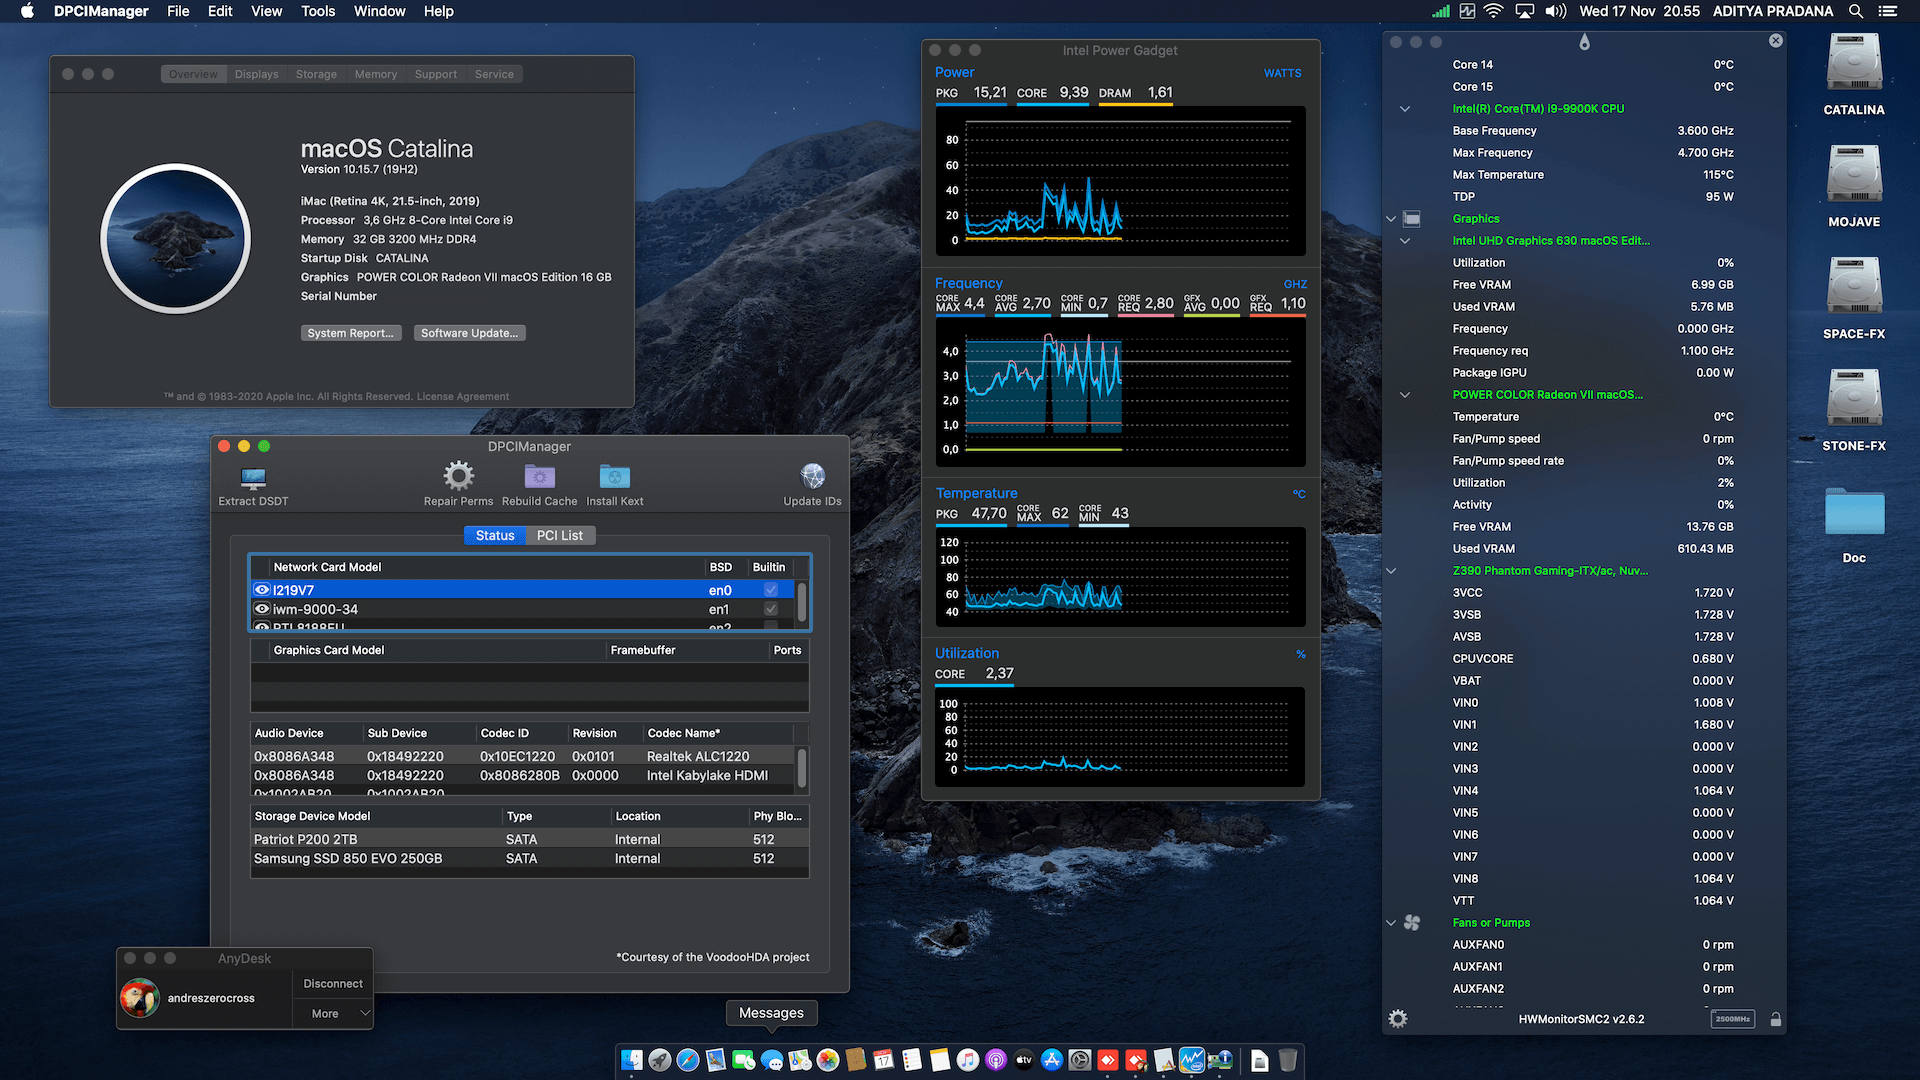 Success Hackintosh macOS Catalina 10.15.7 Build 19H2 in Asrock Z390 Phantom Gaming-ITX/AC + Intel Core i9 9900K + Power Color Radeon VII